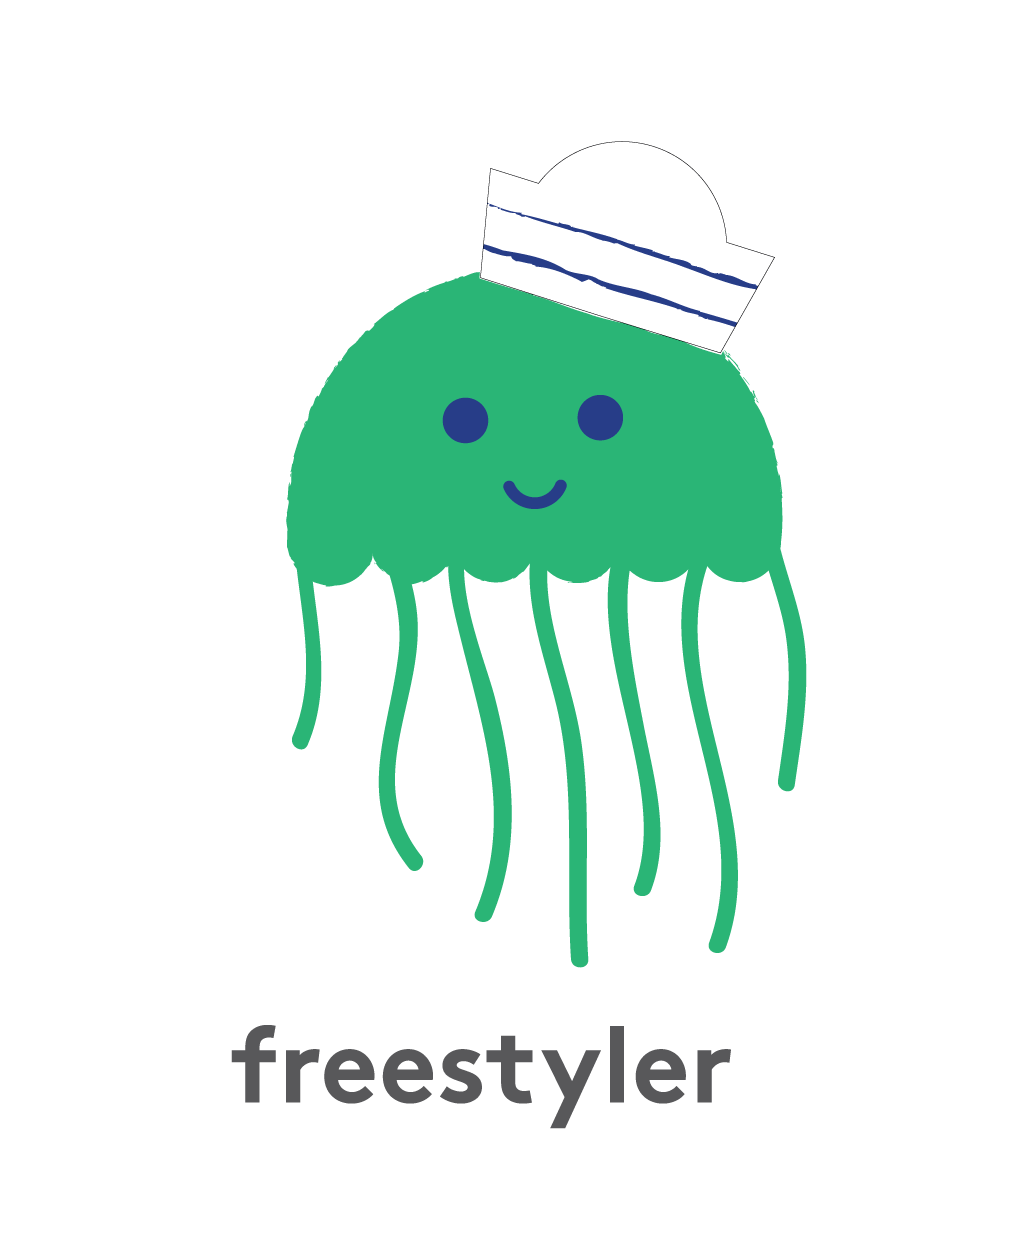 Jellyfish: Freestyler